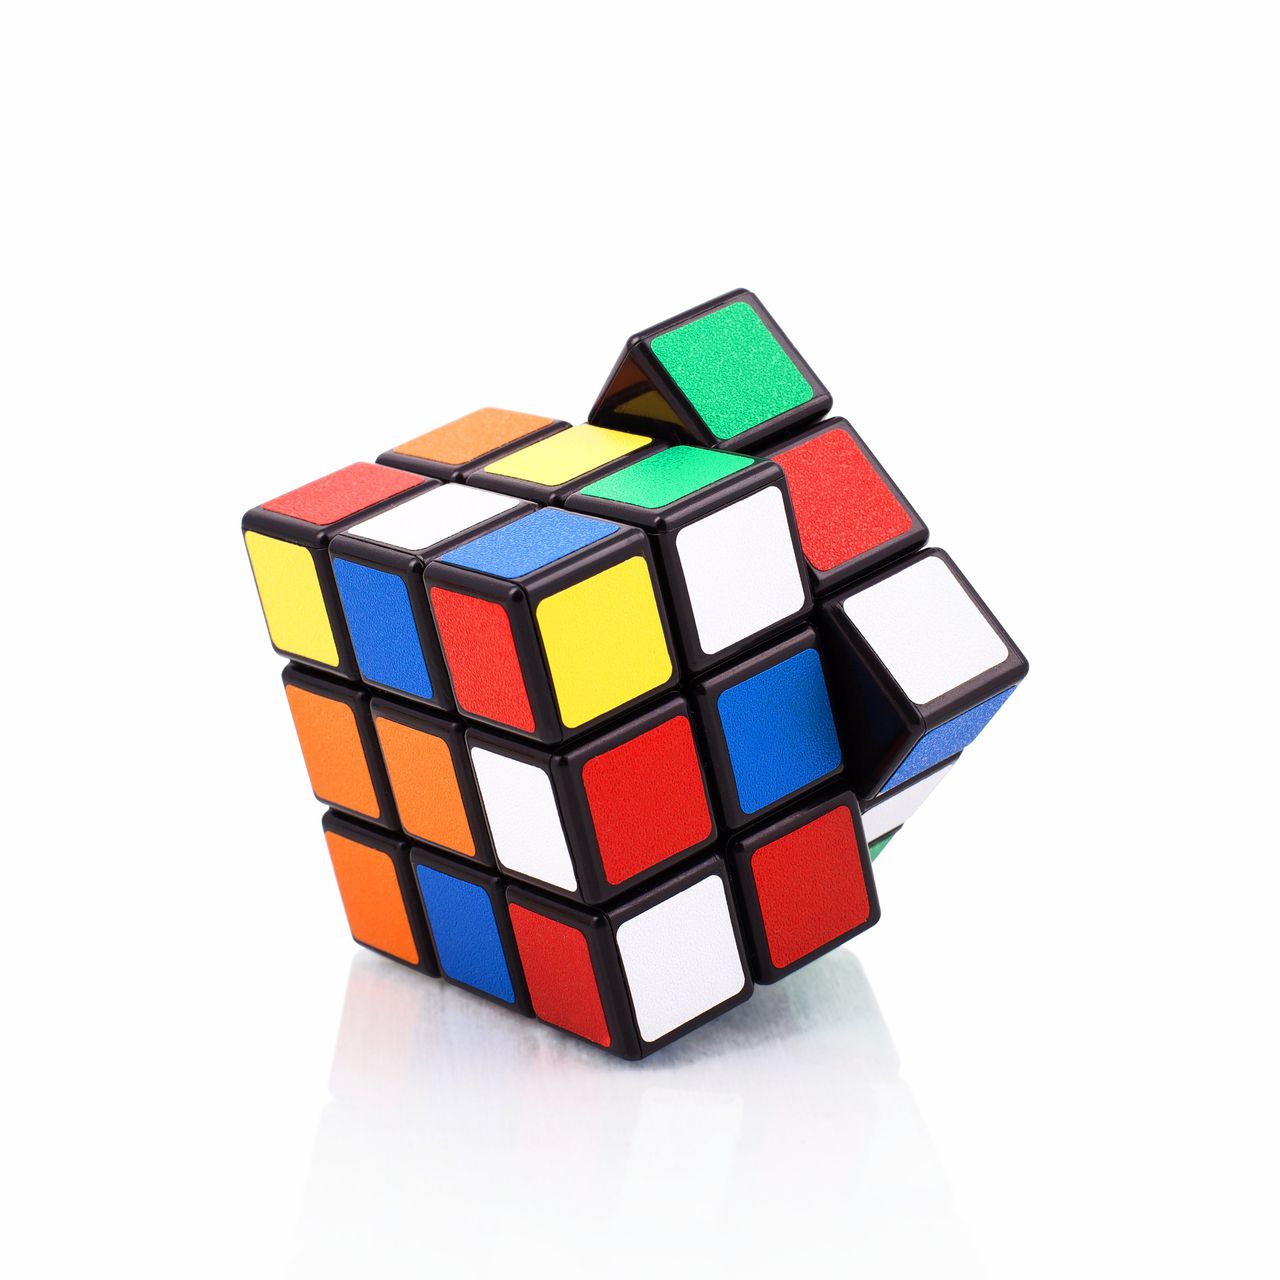 Kleur Rubiks beschermd, vorm niet - NRC